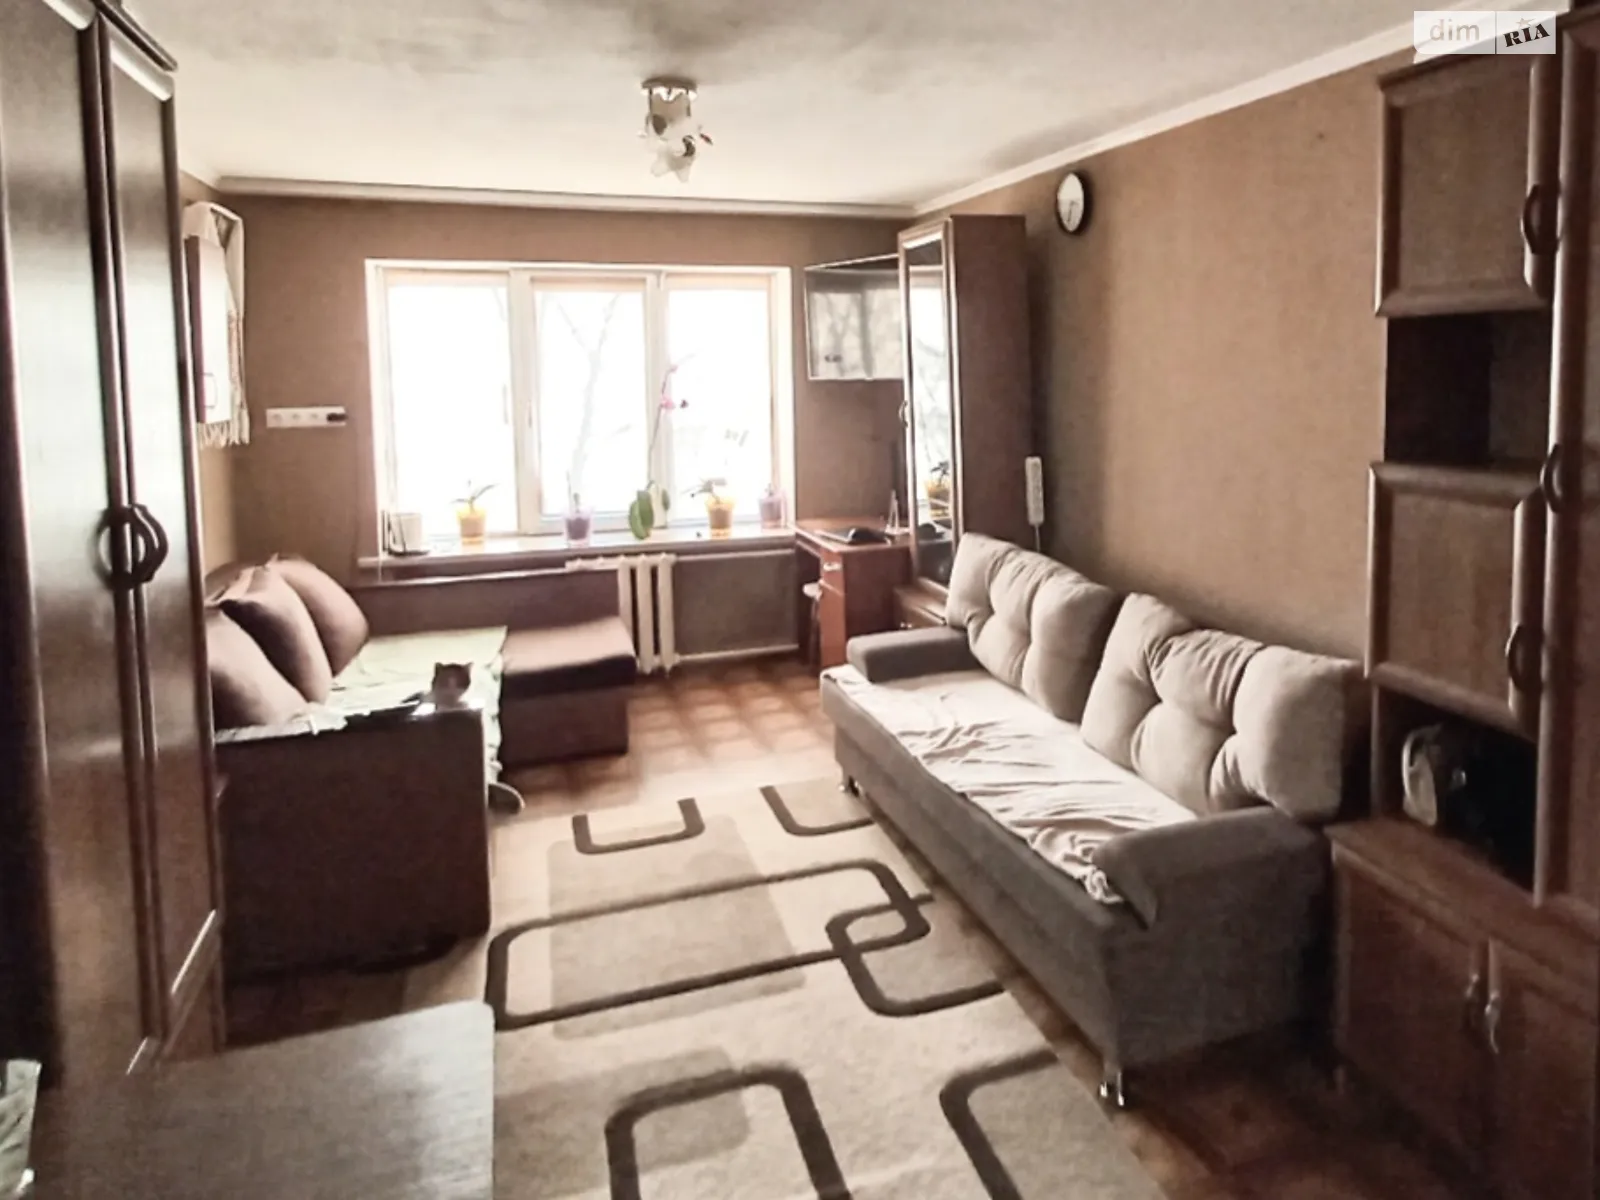 Продается комната 17 кв. м в Ровно, цена: 11900 $